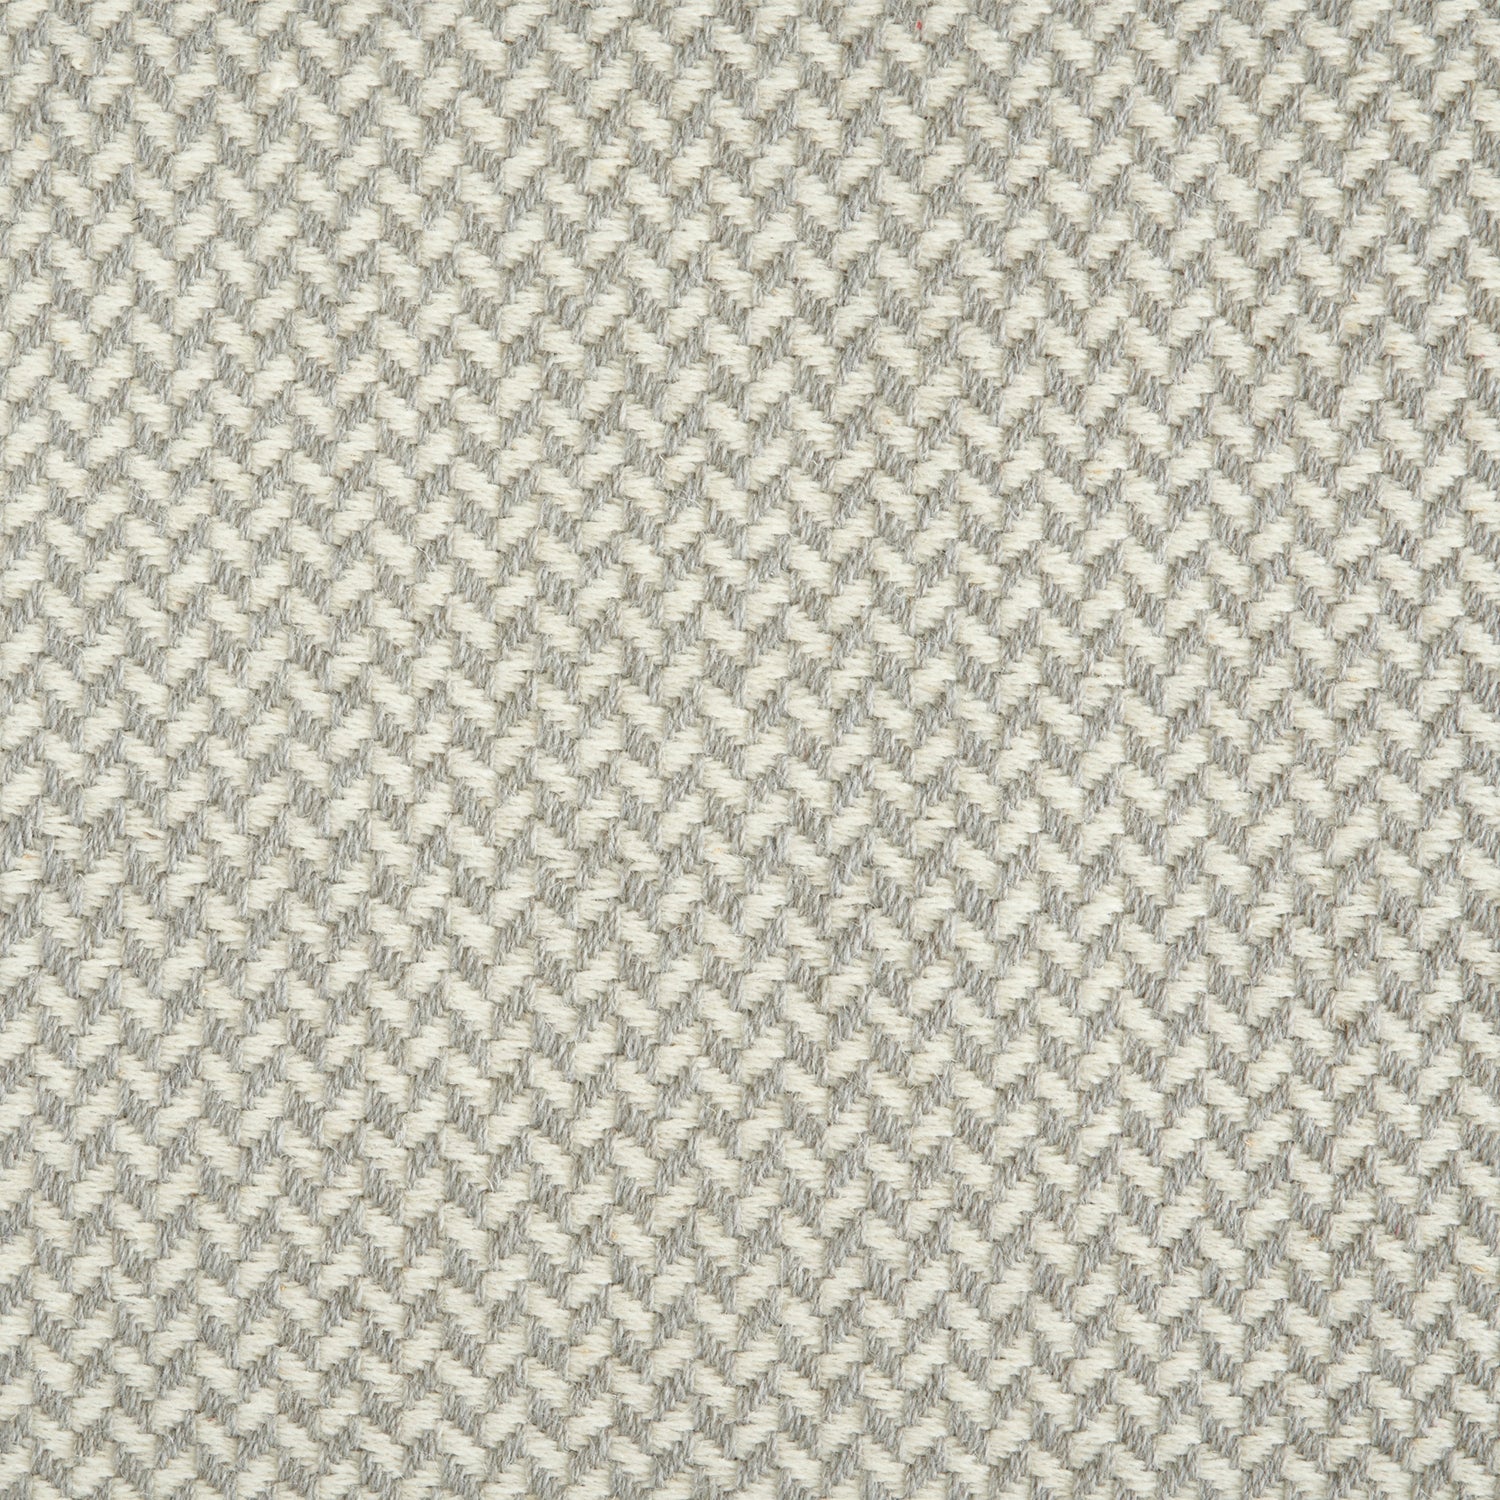 Wool broadloom carpet swatch in a herringbone pattern in shades of alternating cream and gray.